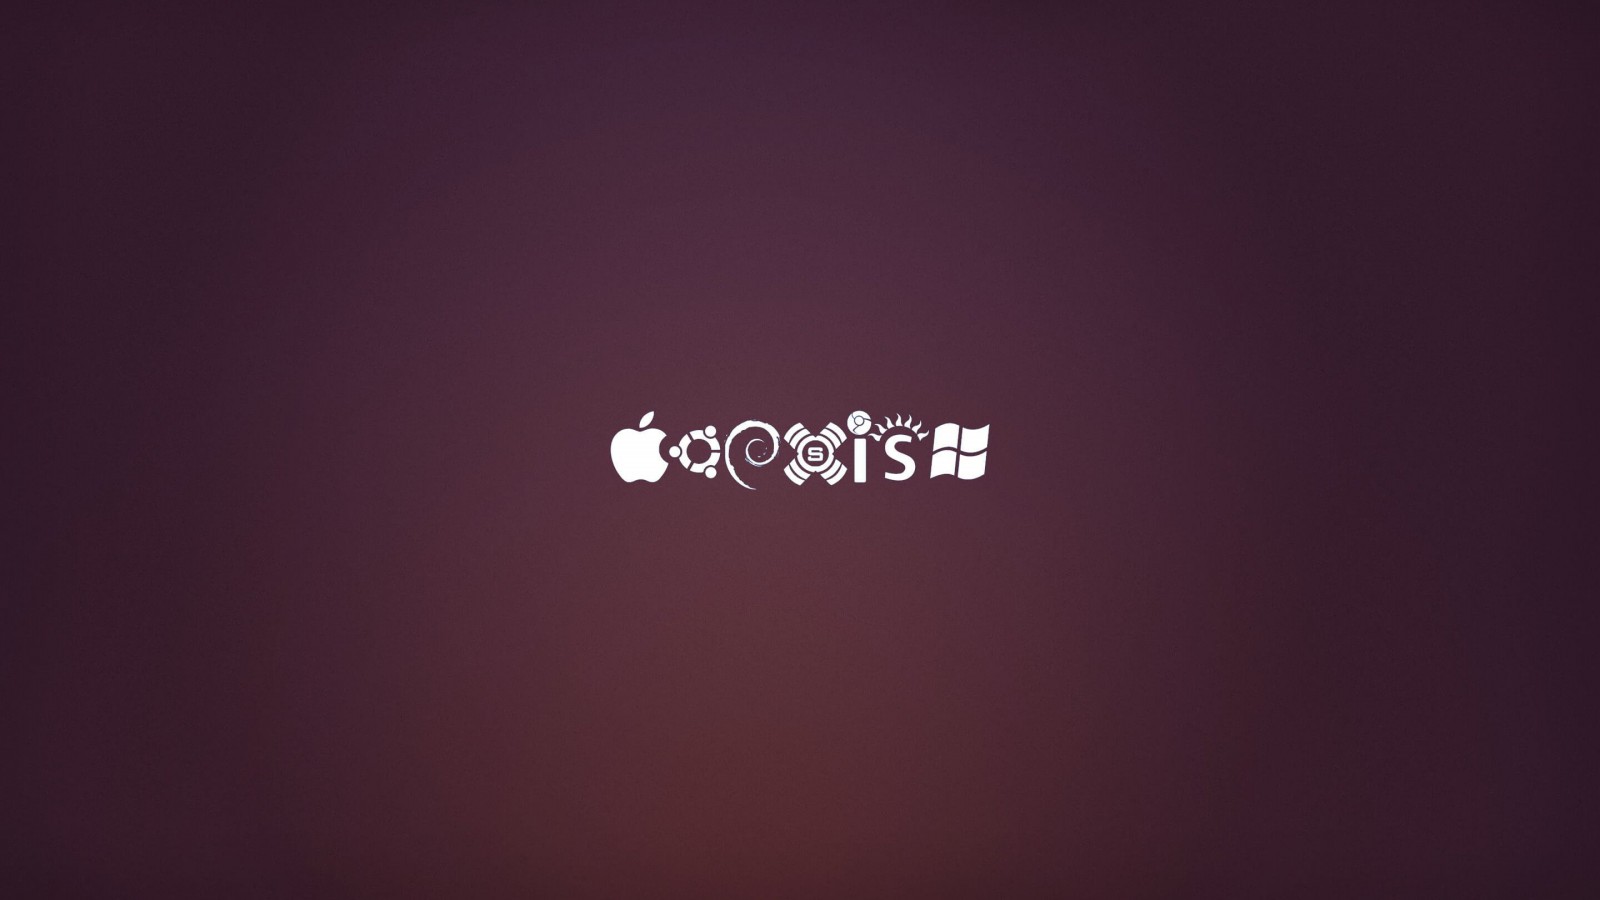 OS Coexist Wallpaper for Desktop 1600x900